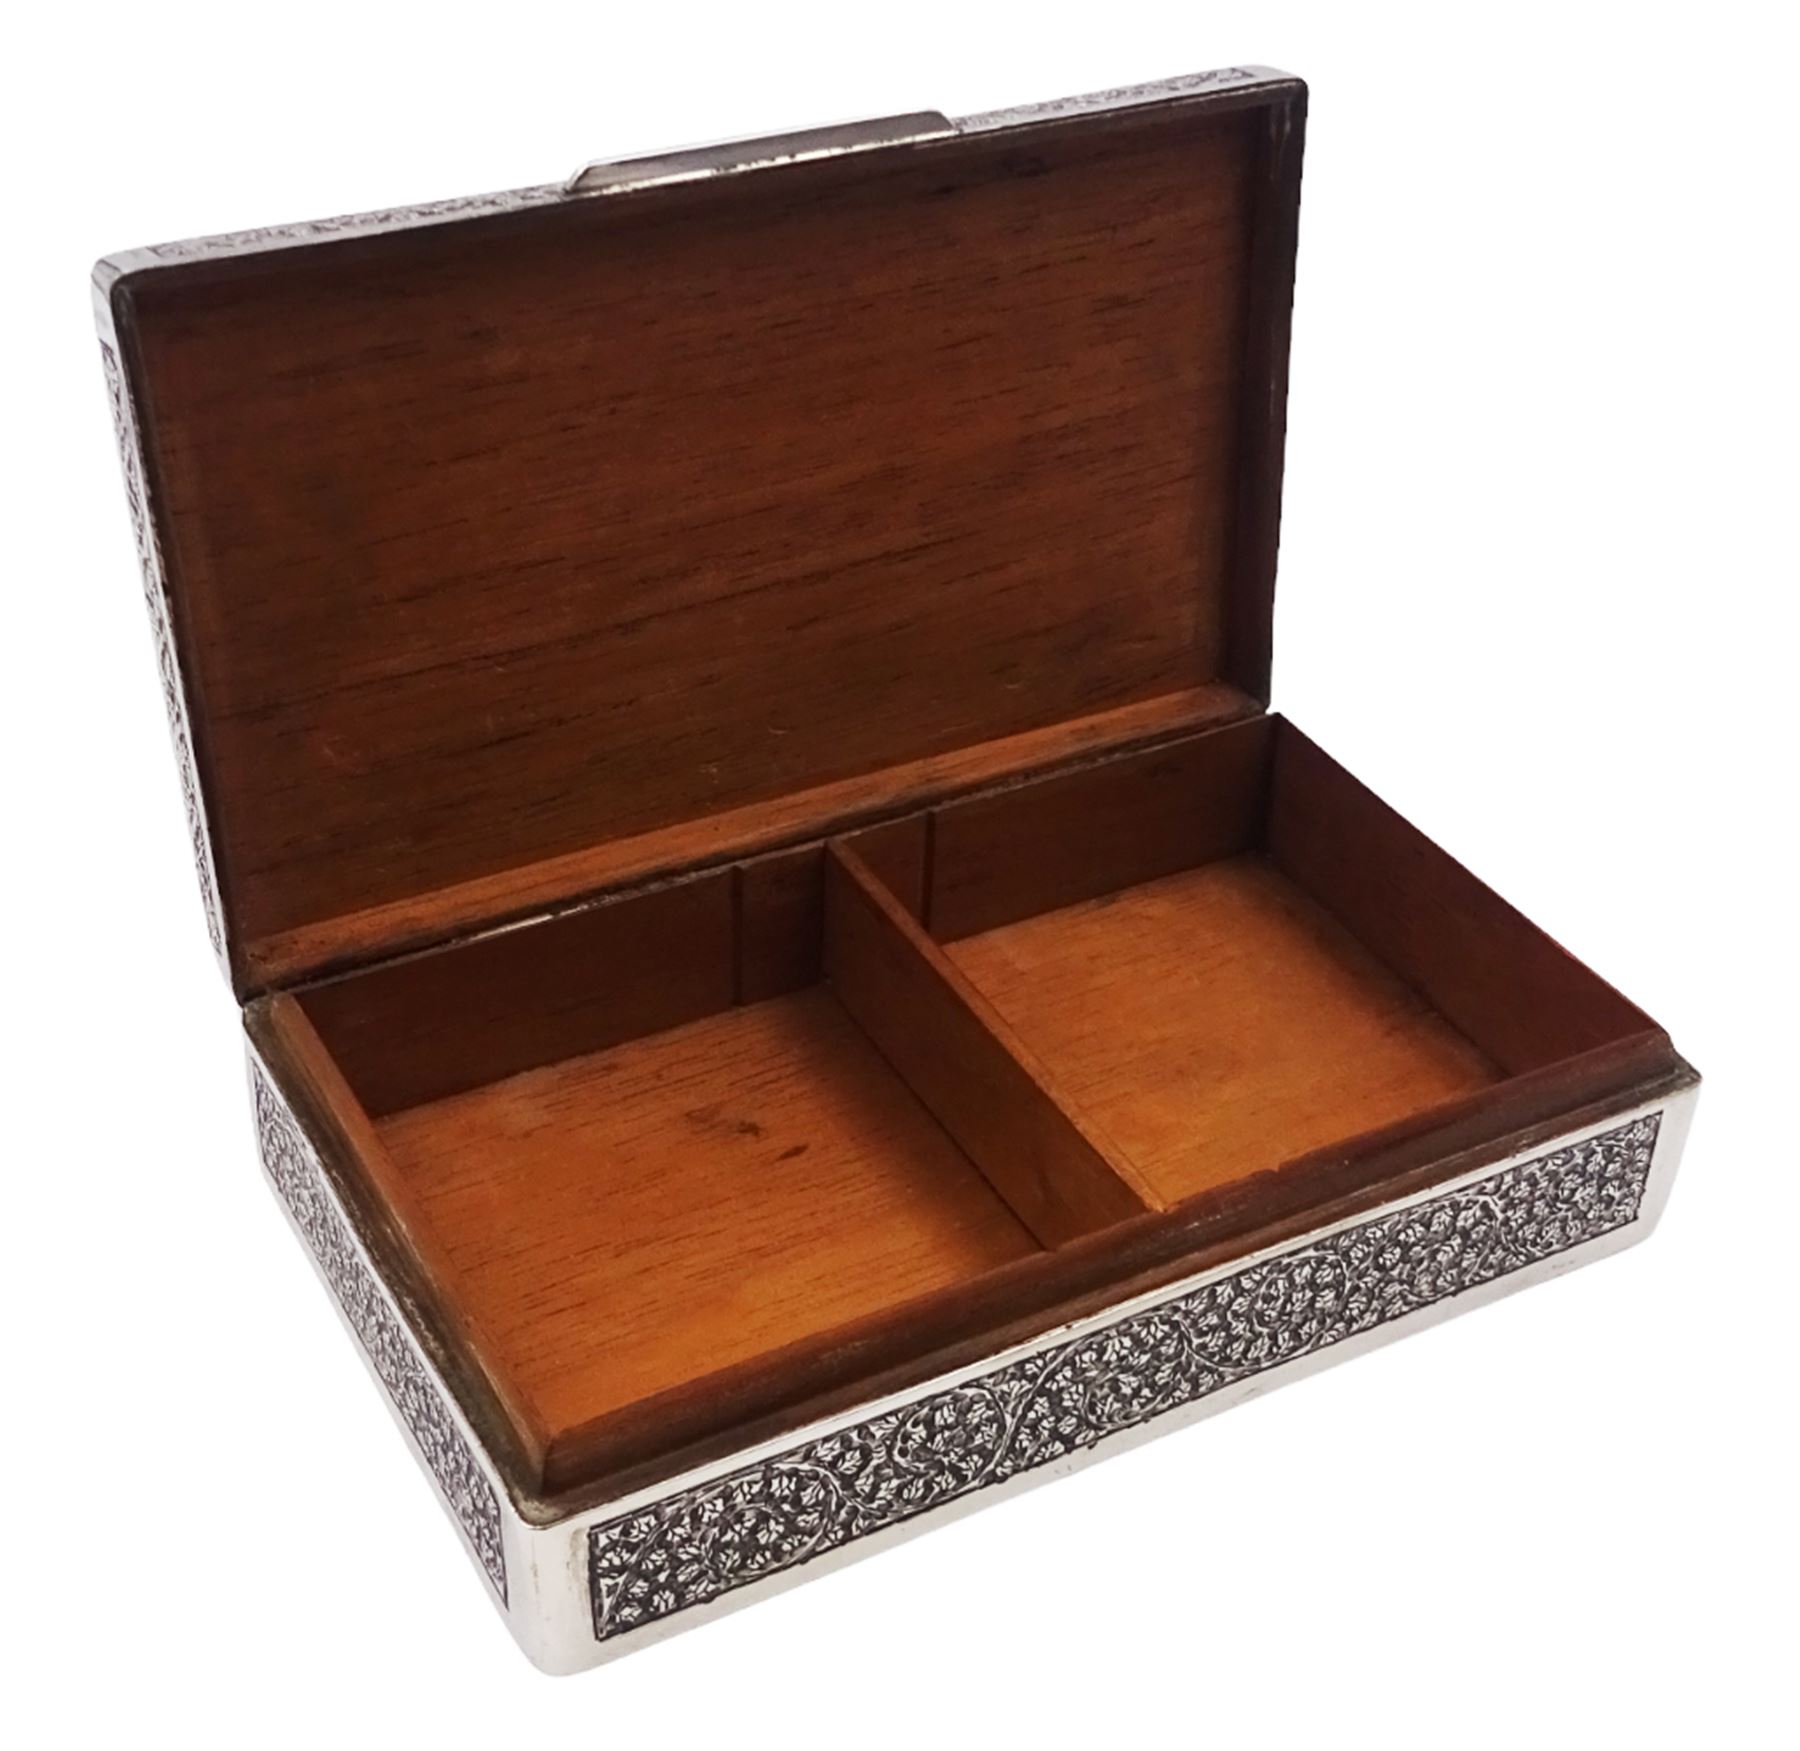 Indian silver cigarette box - Image 2 of 4